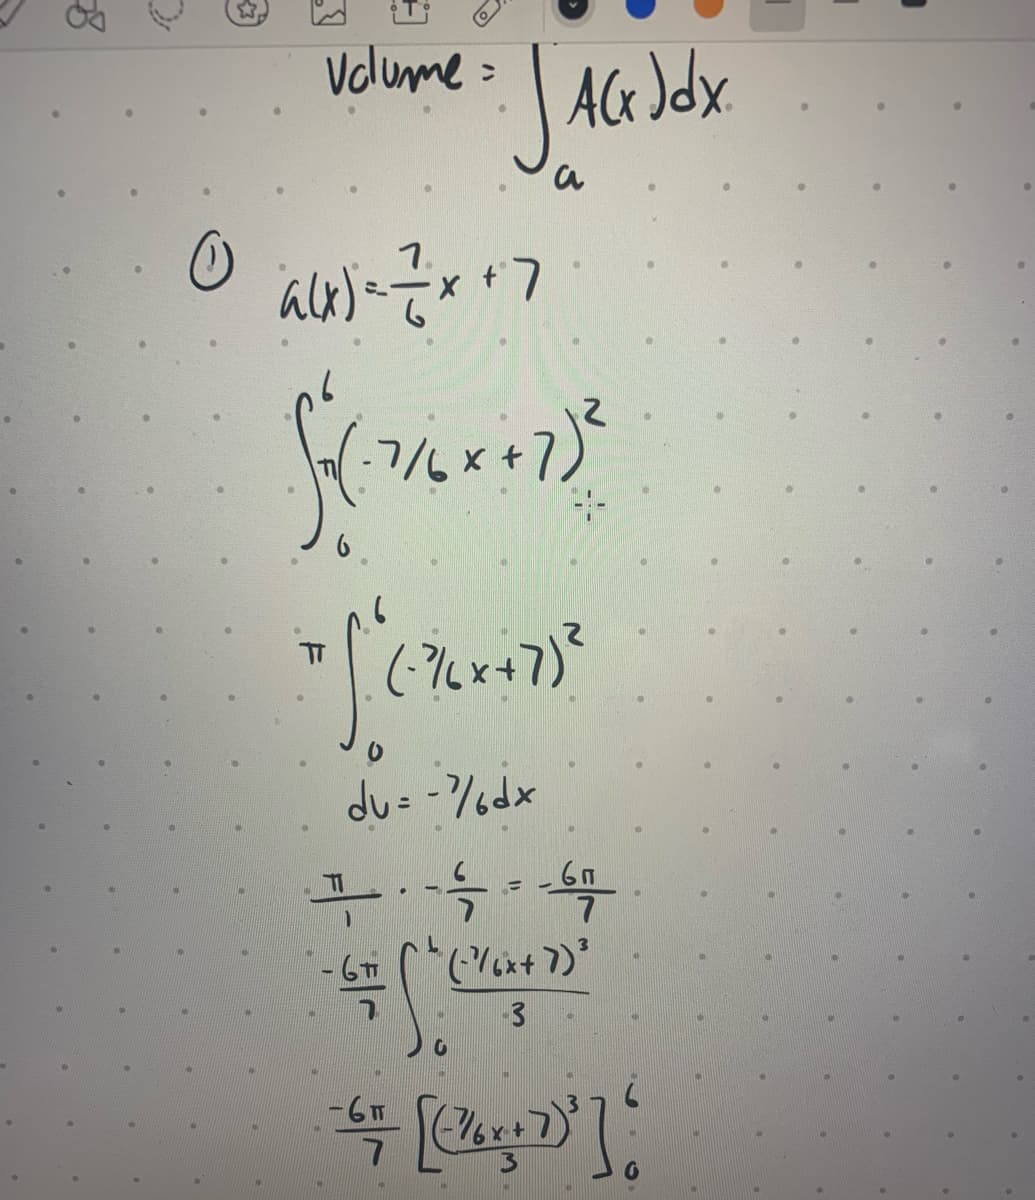 8
(
Volume=
① au)=-x+ 7
716x47)2
4-
dv=-16dx
ㅍ윽
E
A(x Jdx.
of ((x+²
0
약
a
-6ㅠ
_6T
(-16x+7) ²
-3
[²]
.